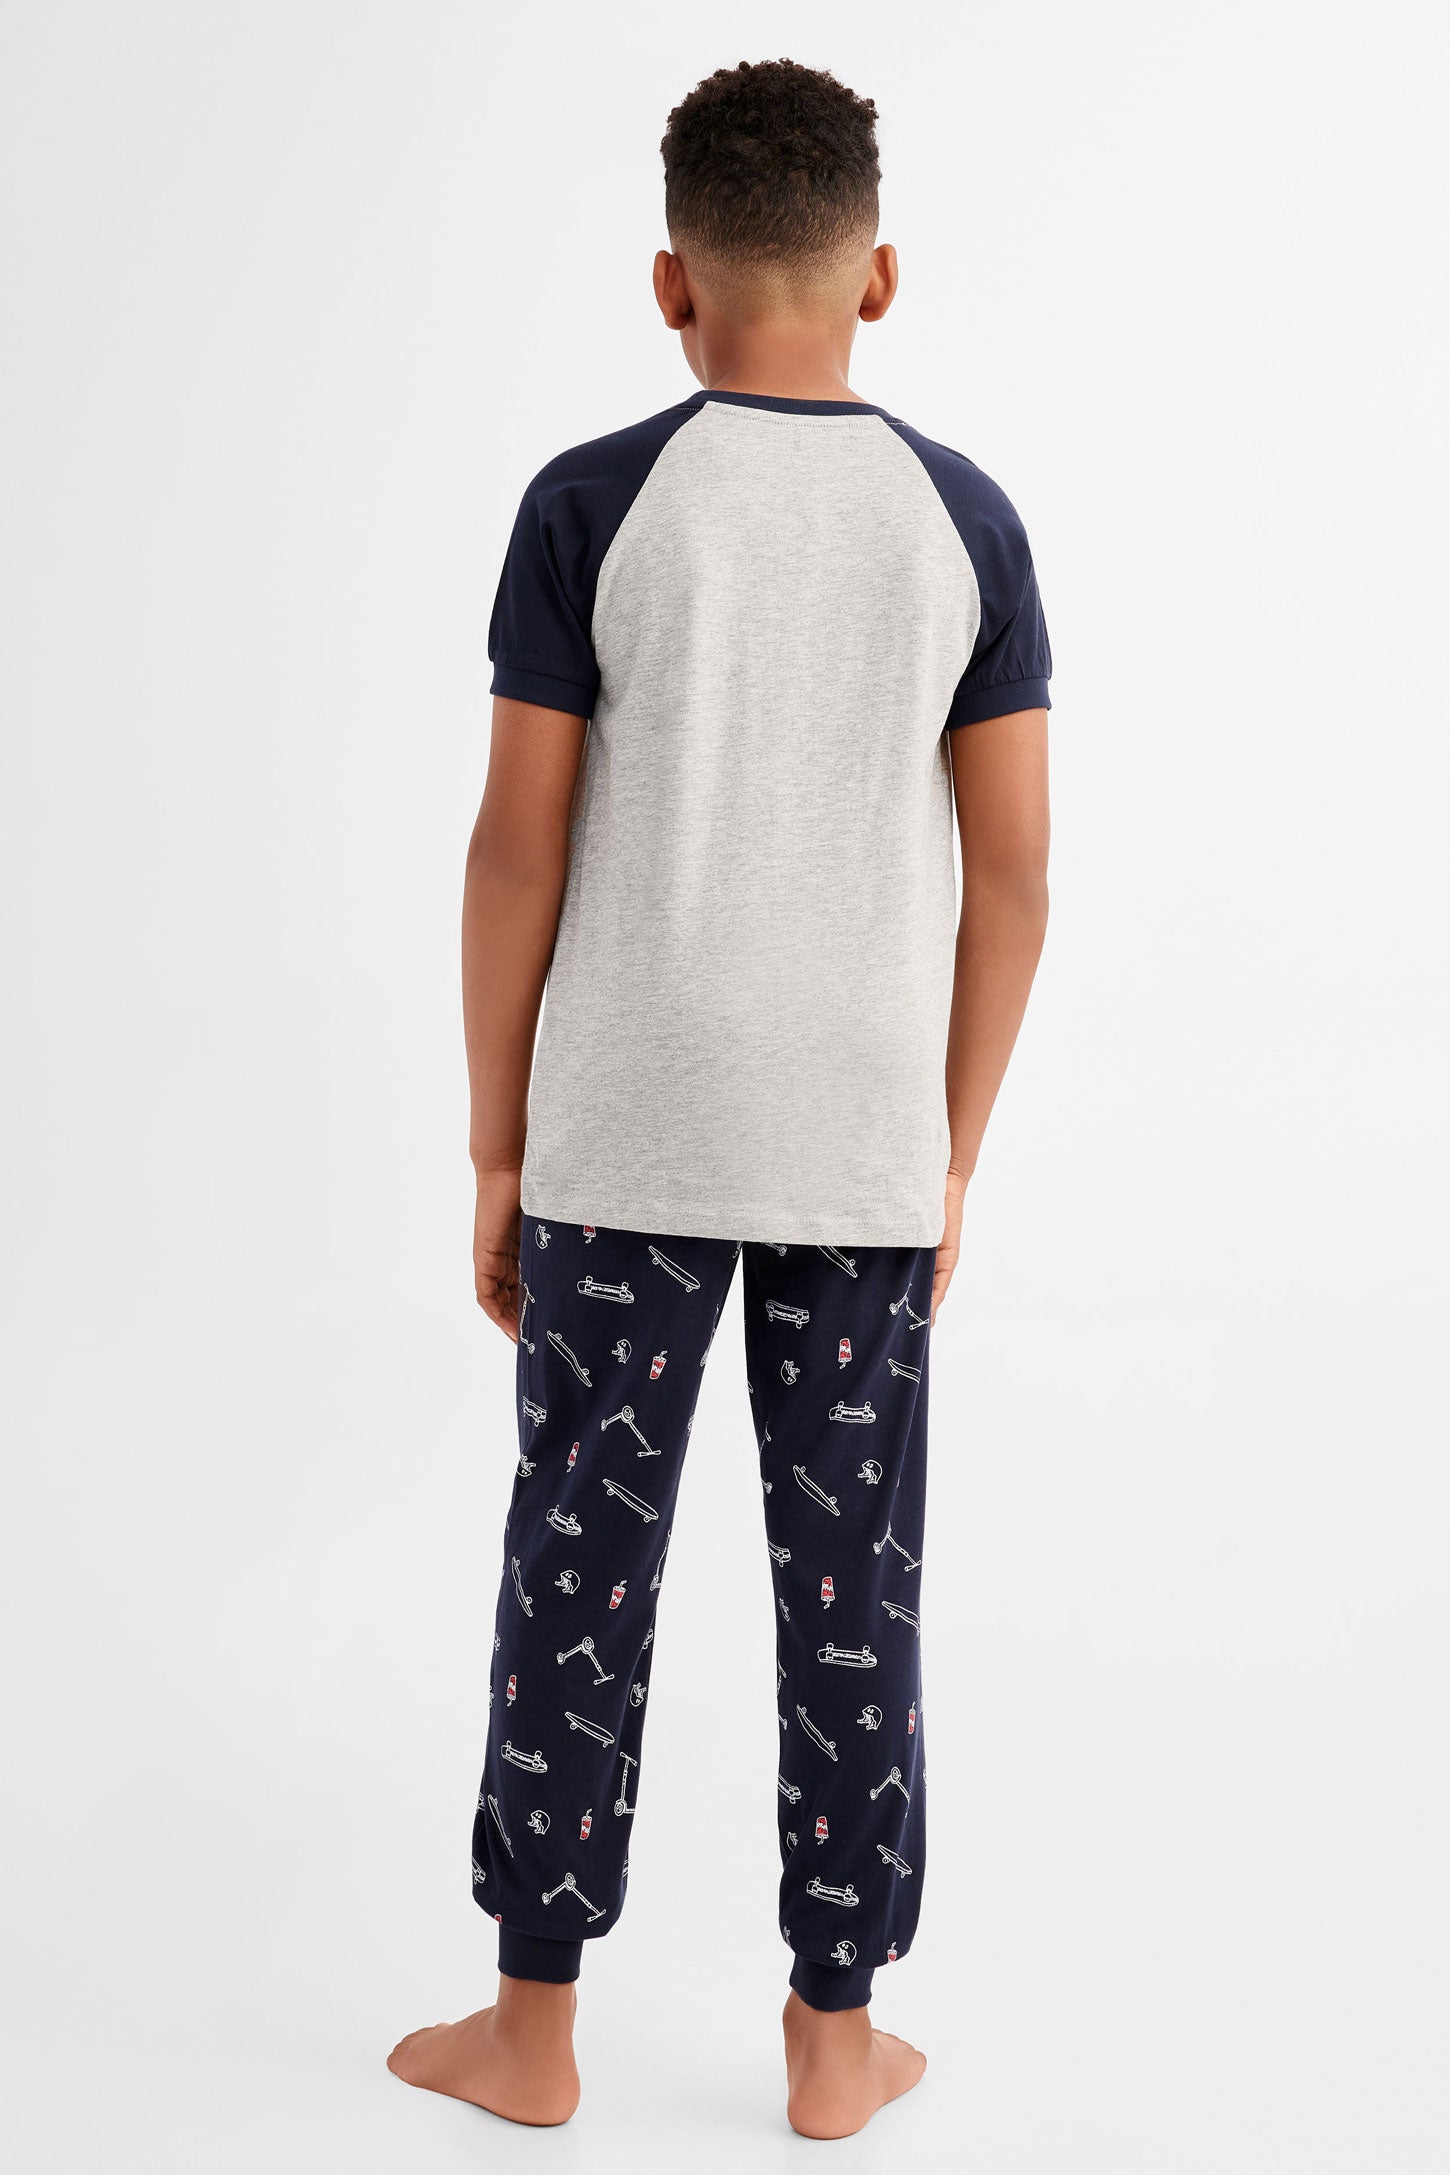 Pyjama 2-pièces en coton, 2/40$ - Ado garçon && GRIS MIXTE